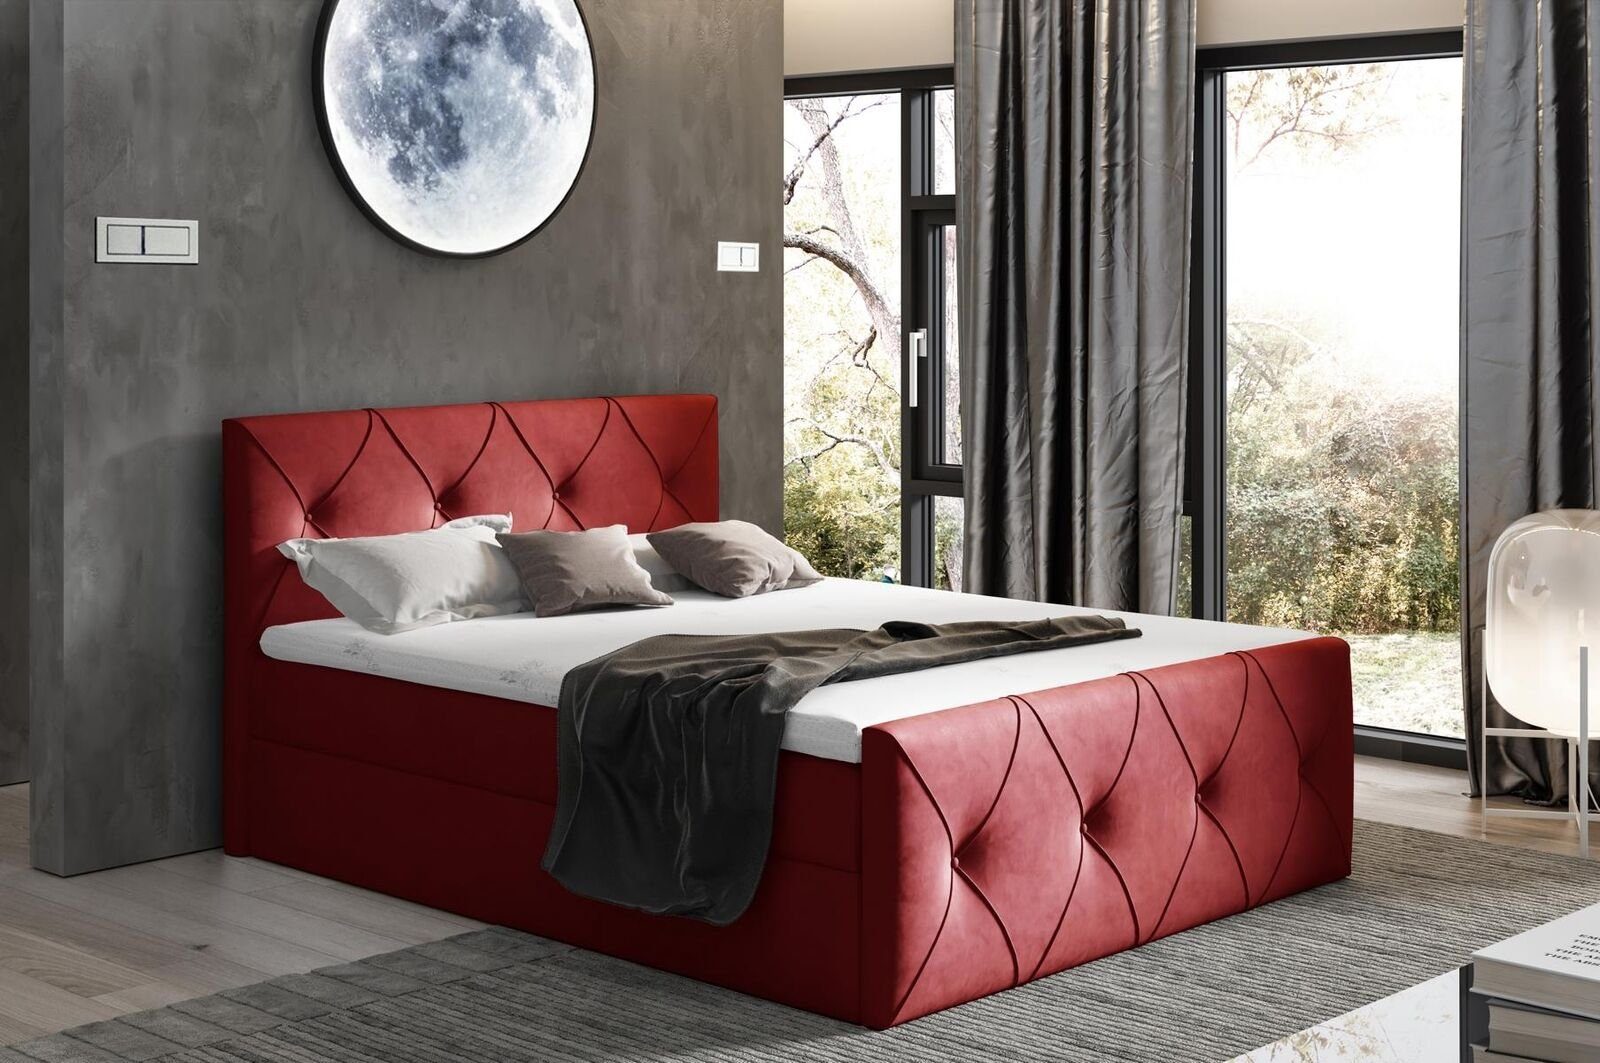 JVmoebel Boxspringbett, Schlafzimmer Design Bett Textil Doppel Rot Betten Bettkasten Boxspringbett